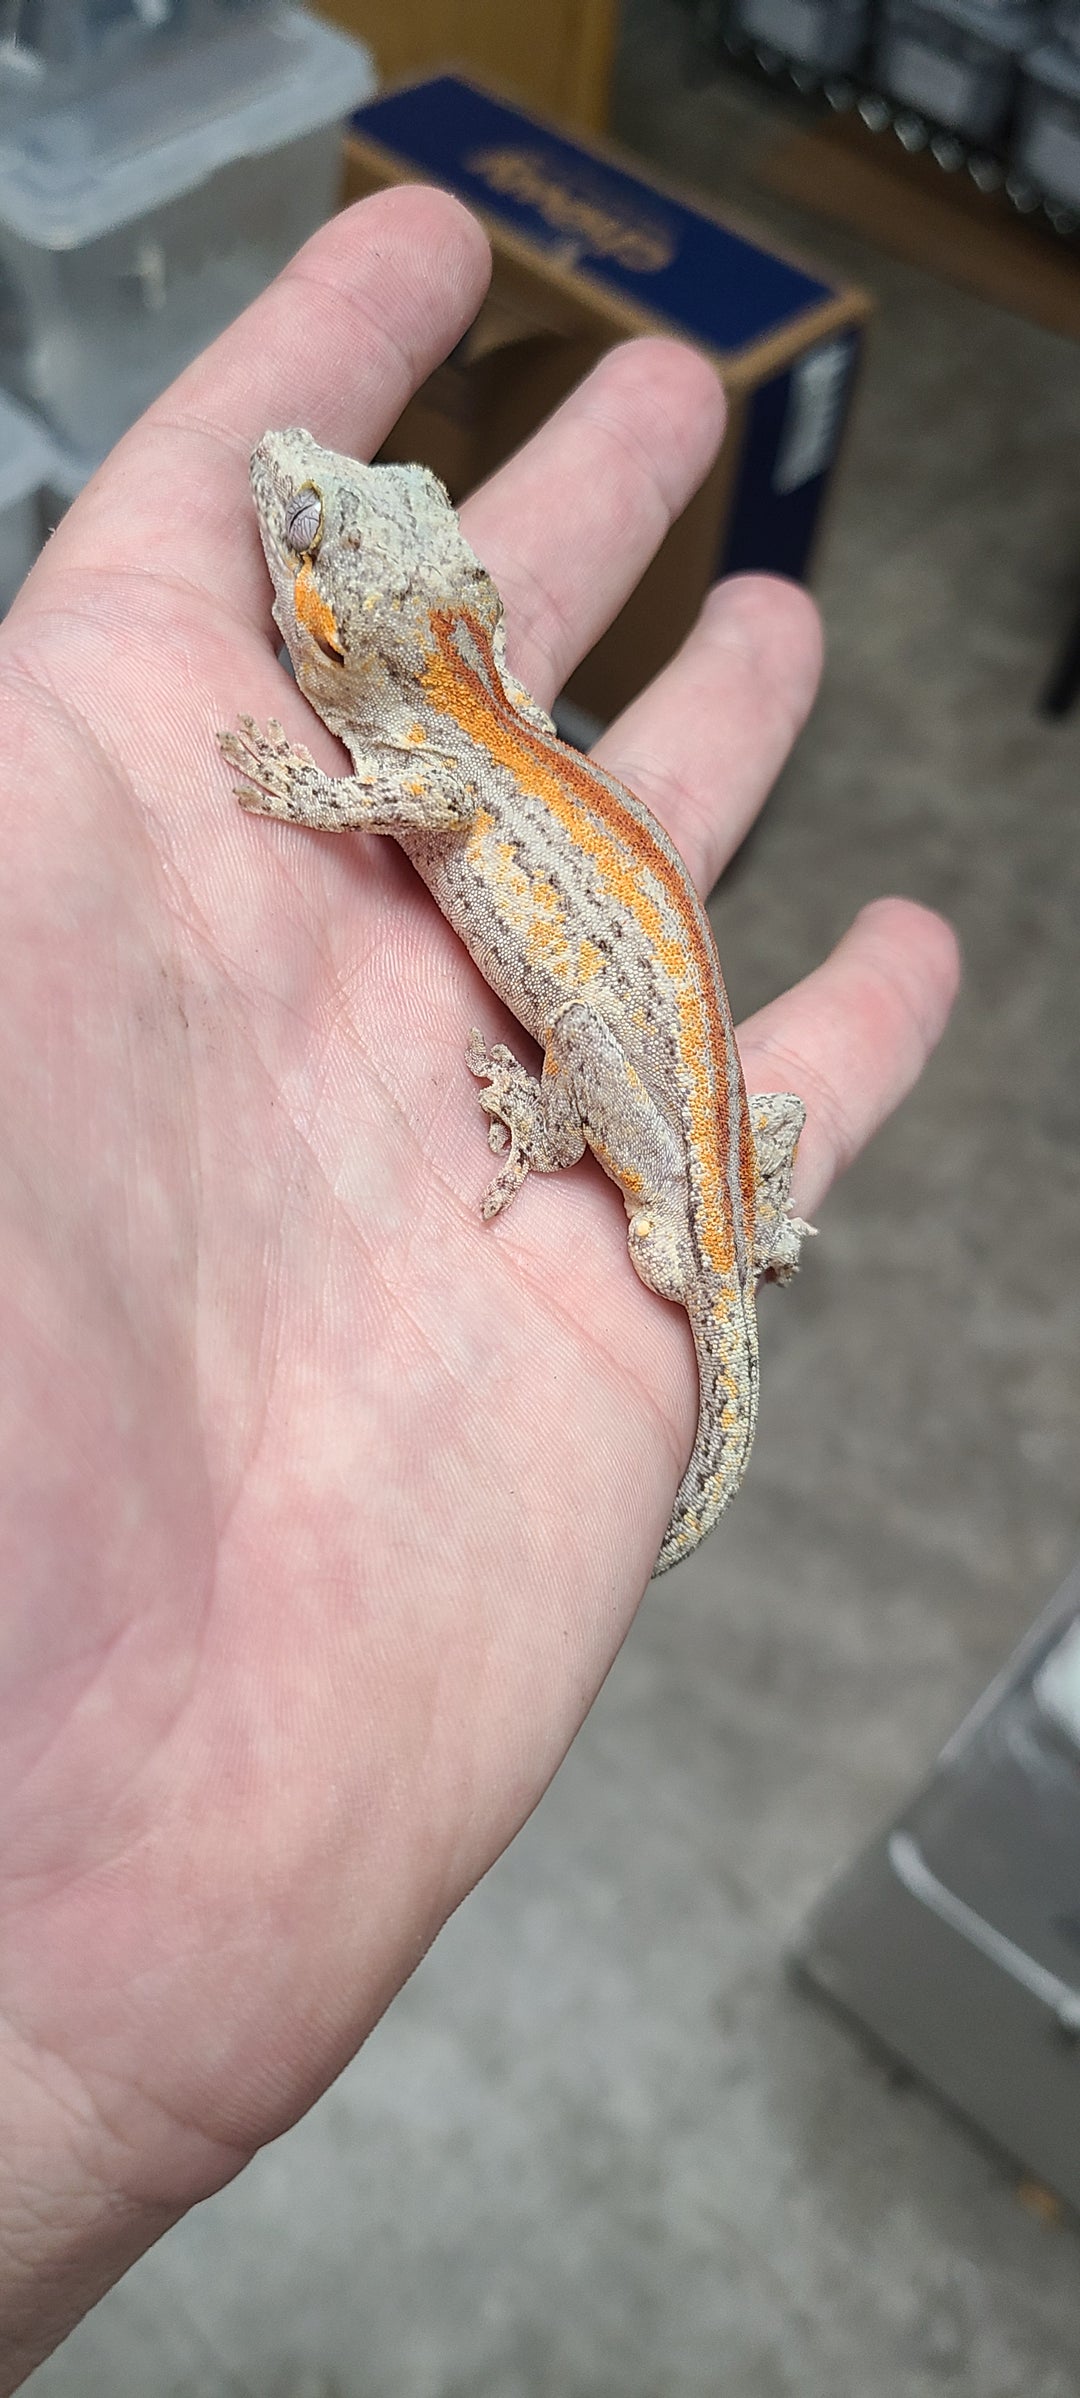 Rhacodactylus auriculatus (Gargoyle Gecko) Orange-Red Stripe Adult Male